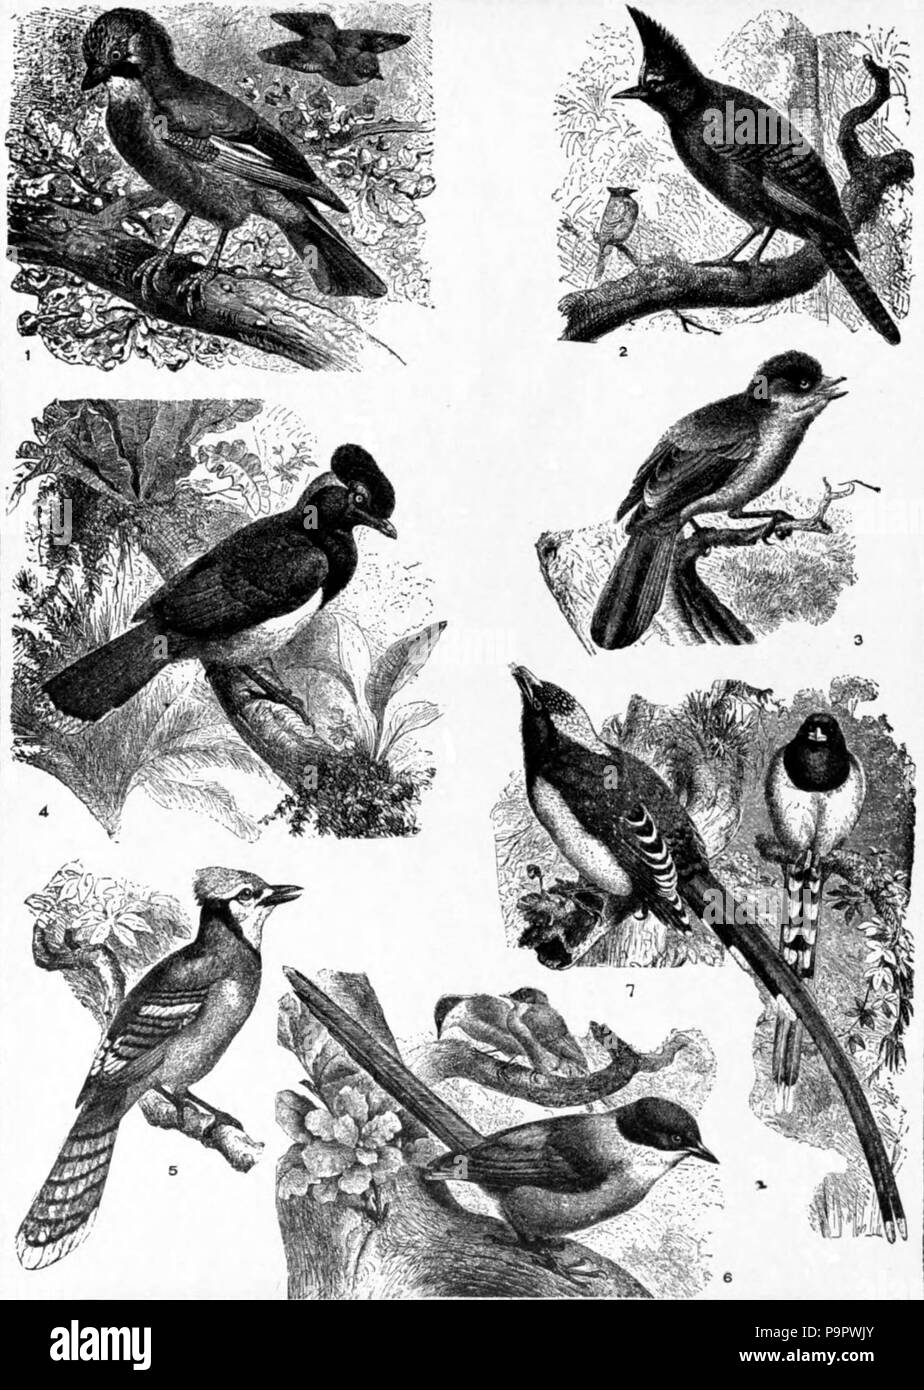 . Inglese: Disegni di sette uccelli del Jay famiglia: (1) Unione Jay (Garrulus glandarius) (2), Messico Long-crested Jay (Cyanocitta diademata) (3) Canada Jay (Perisoreus canadensis) (4) Blu-capped Jay (Cyanocorax chrysops) (5) American Bluejay (Cyanocitta cristata) (6) Spagnolo Jay (Cyanopica cooki) (7) rosso-fatturati Jay (Cissa erythrorhyncha) . pubblicato 1920 124 Americana 1920 Jays - Jay famiglia Foto Stock